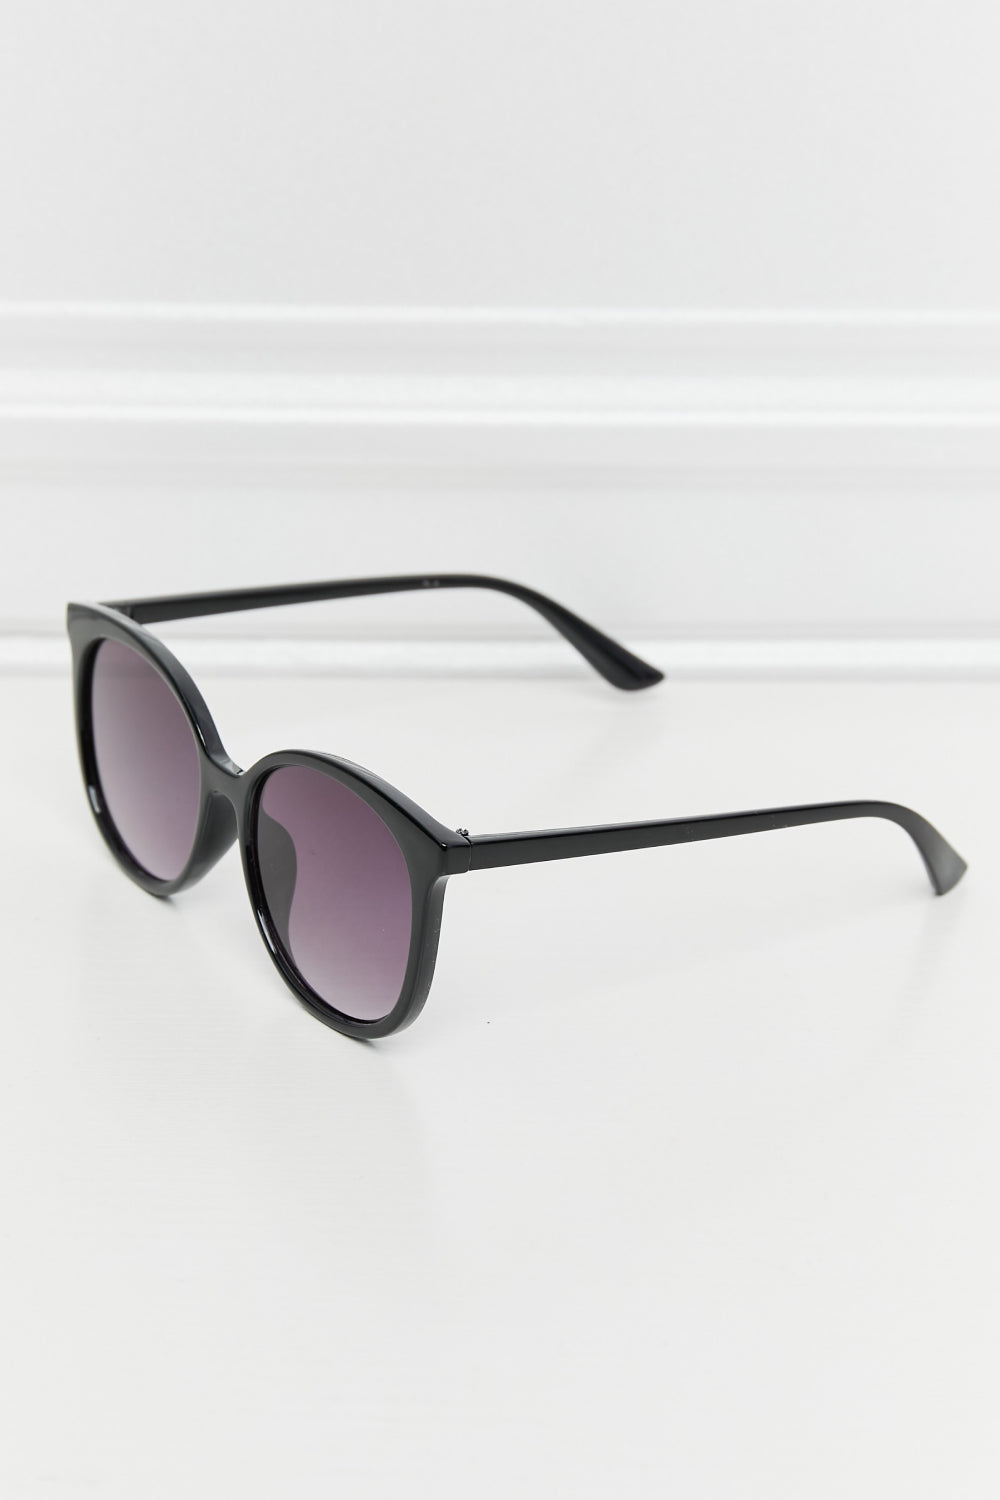 Polycarbonate Frame Full Rim Sunglasses - Tigbul's Fashion